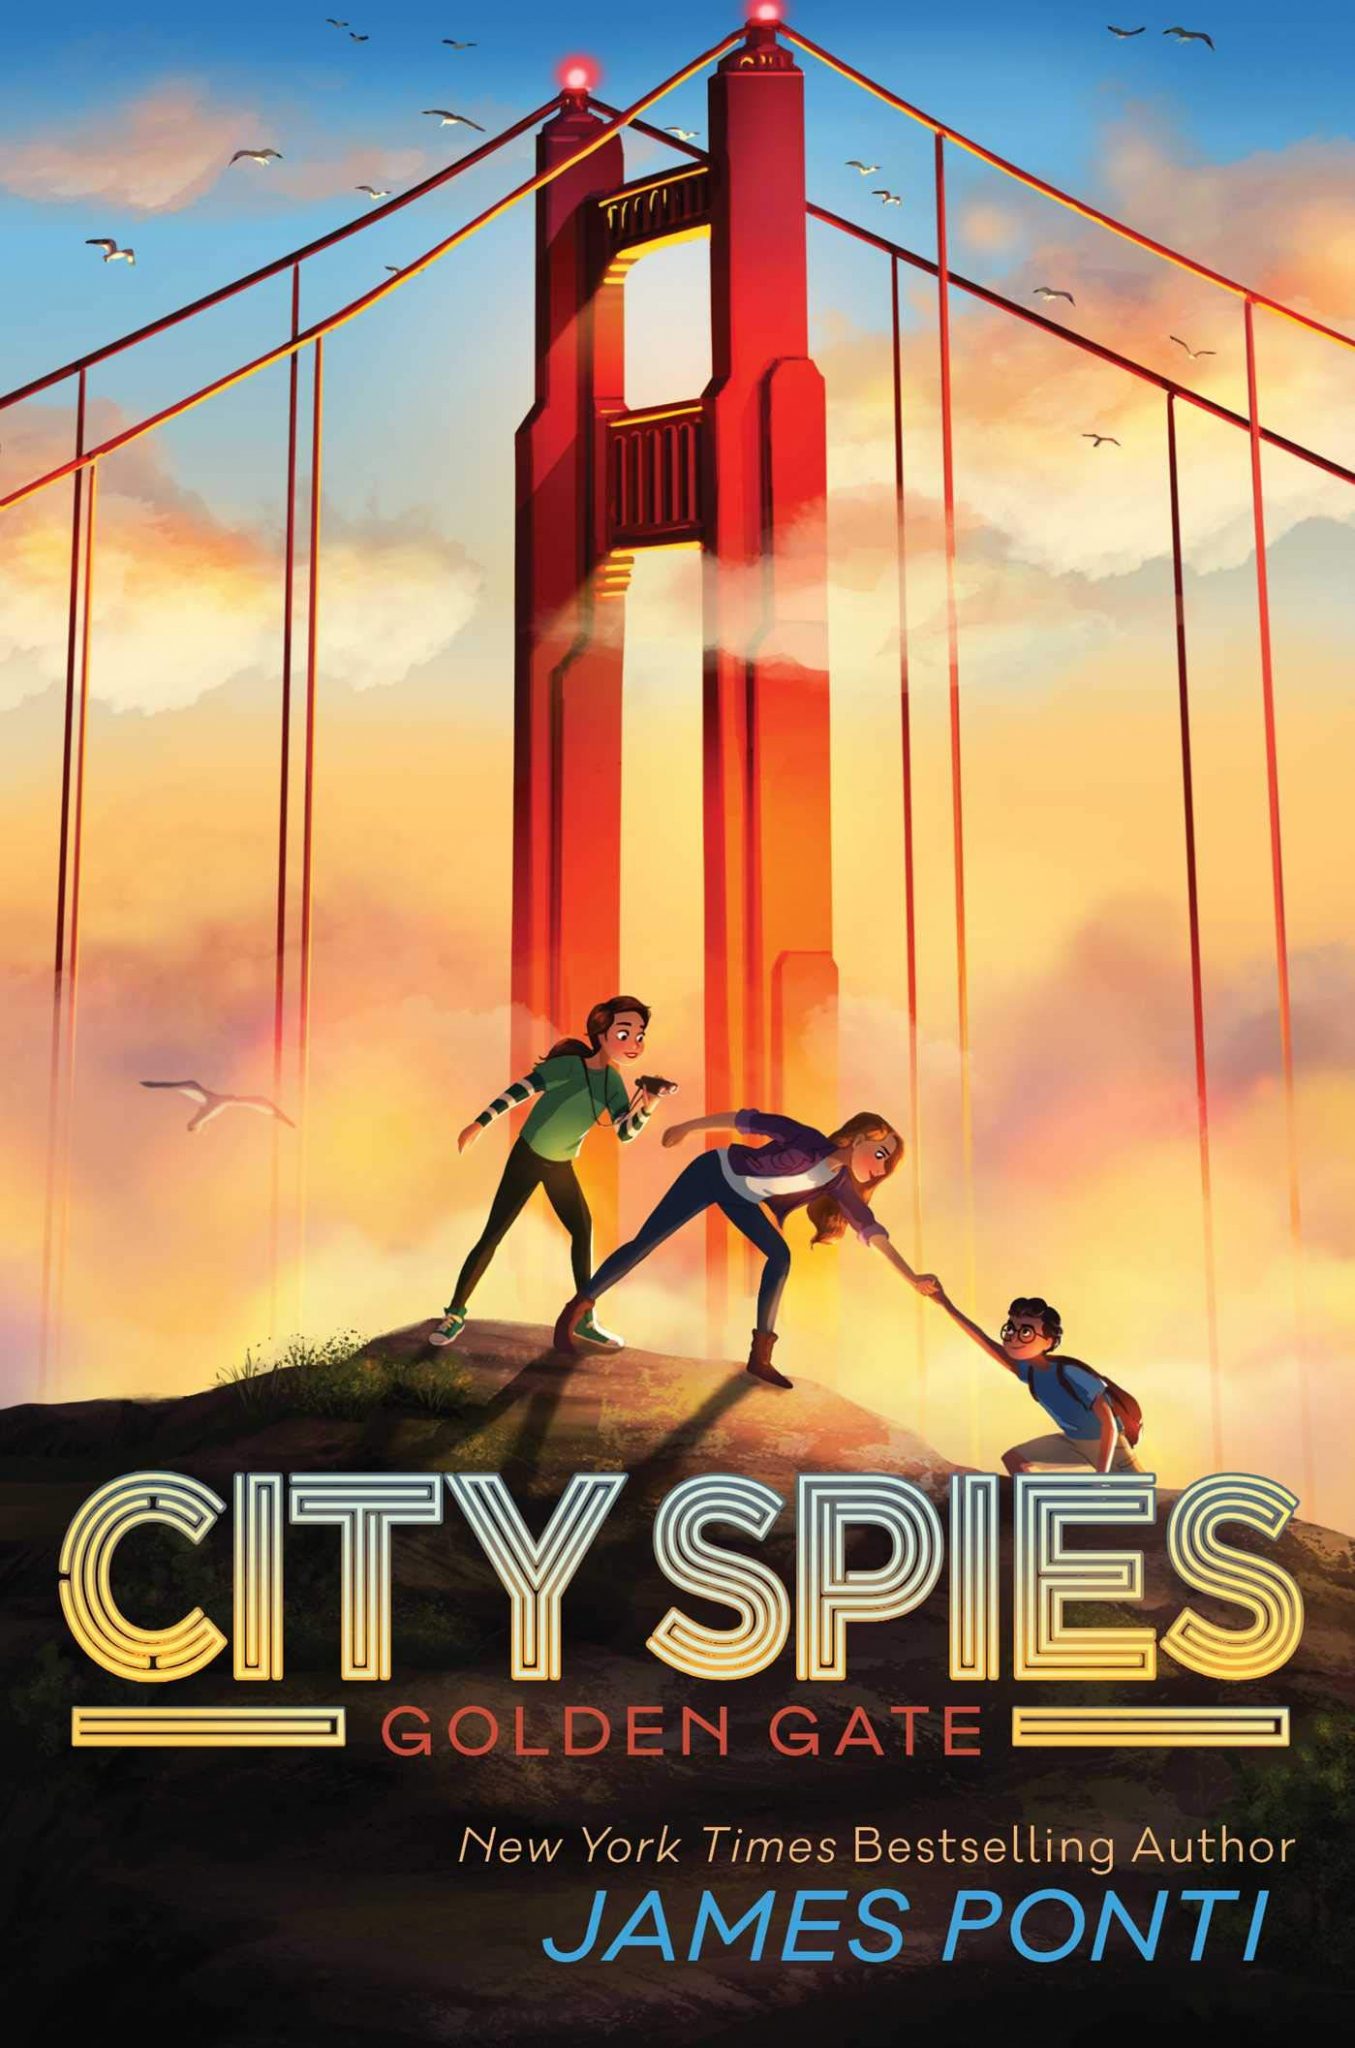 City Spies Series by James Ponti Redeemed Reader